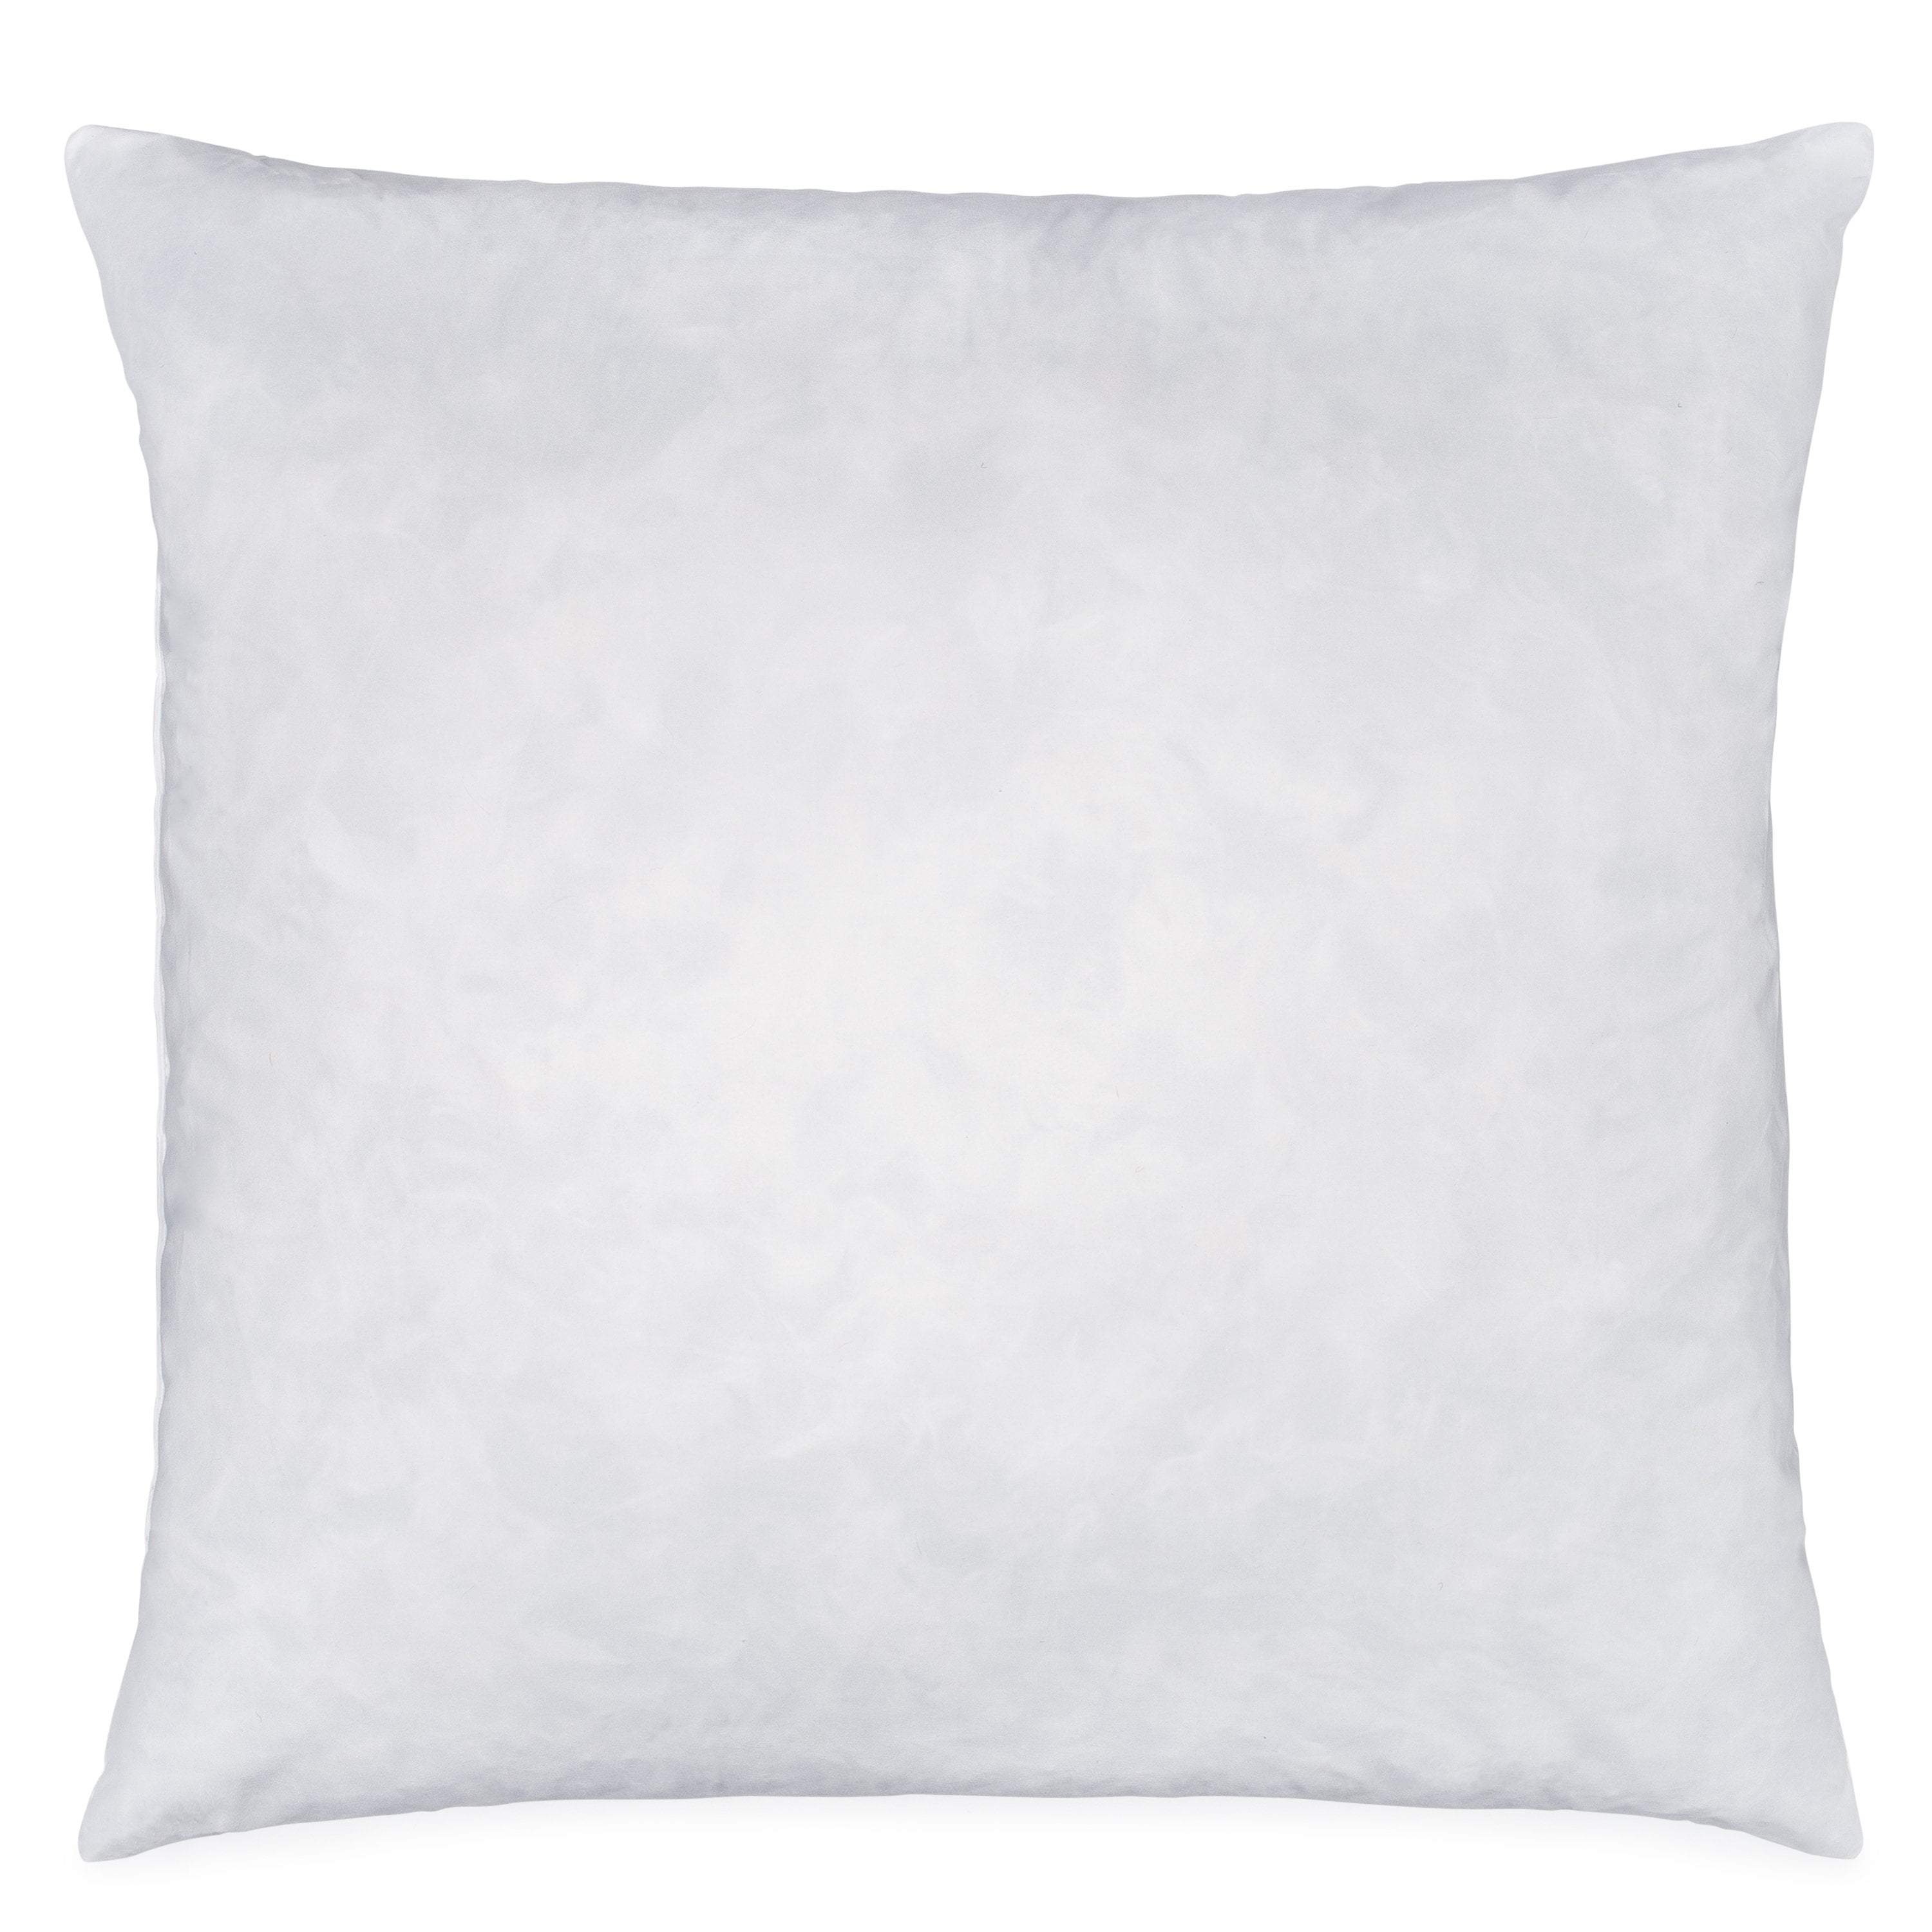 18 x 18 Form Insert Cushion Stuffing Throw Pillow Inserts Down Alternative  USA